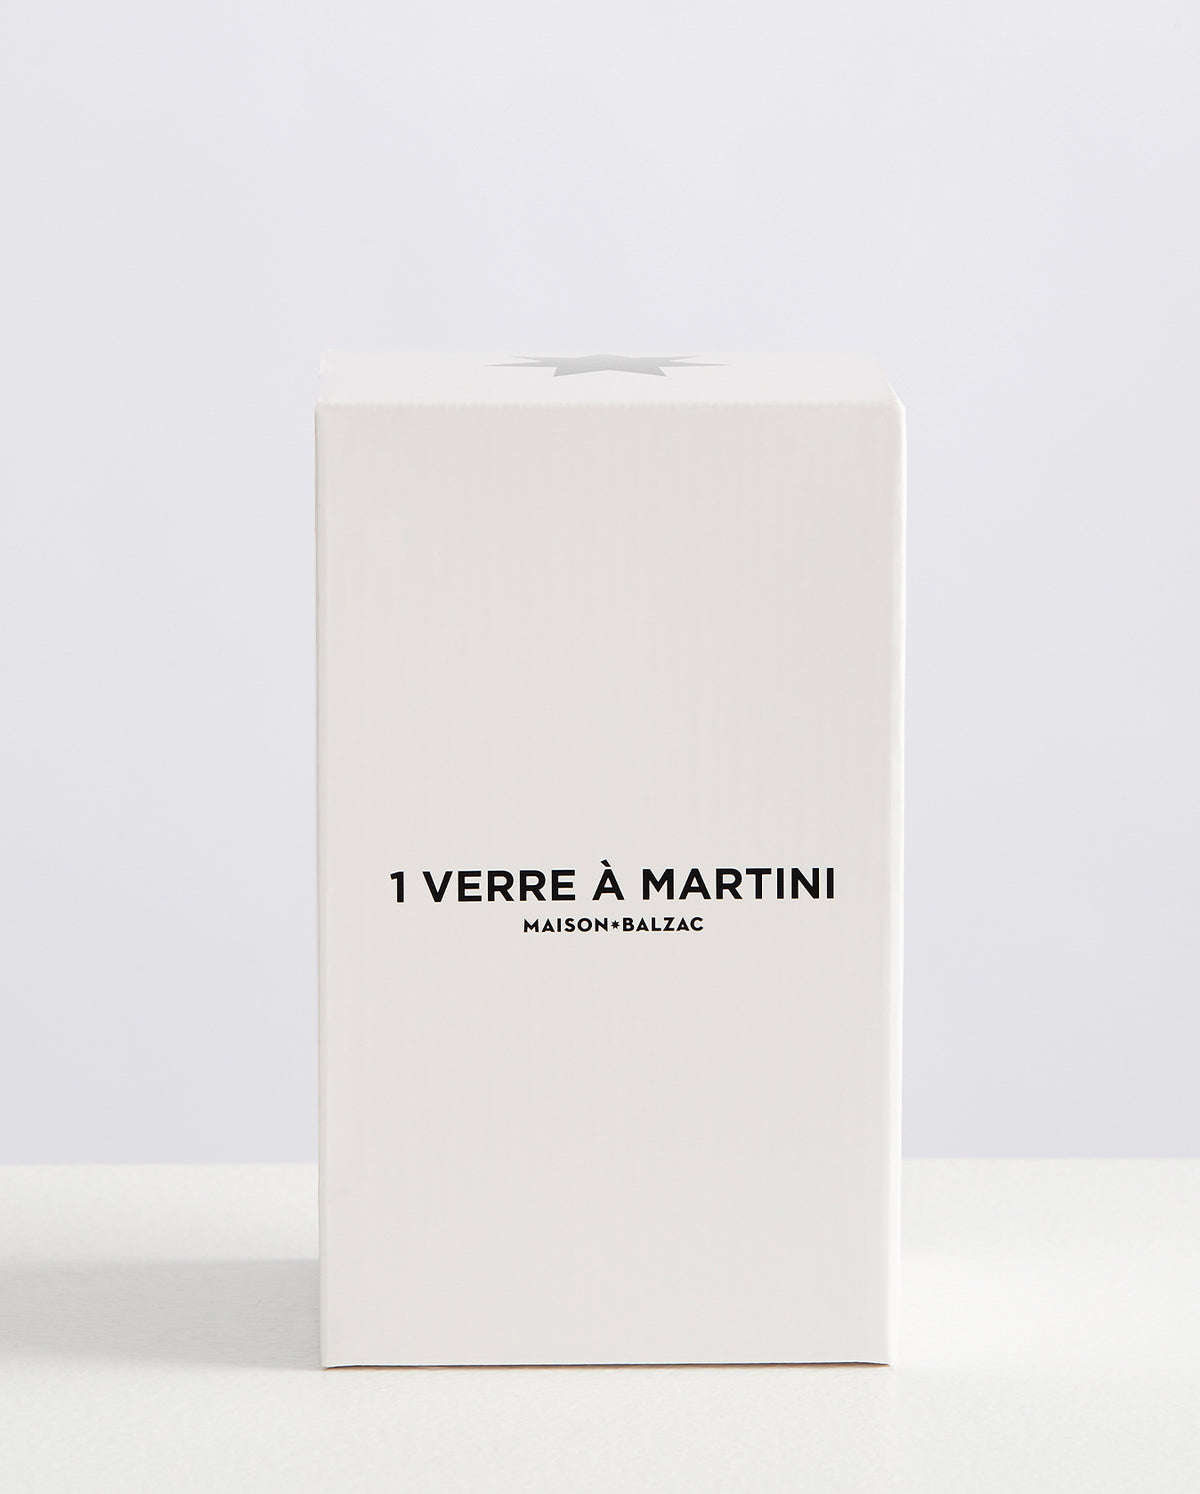 Martini Glass | Clear & Green